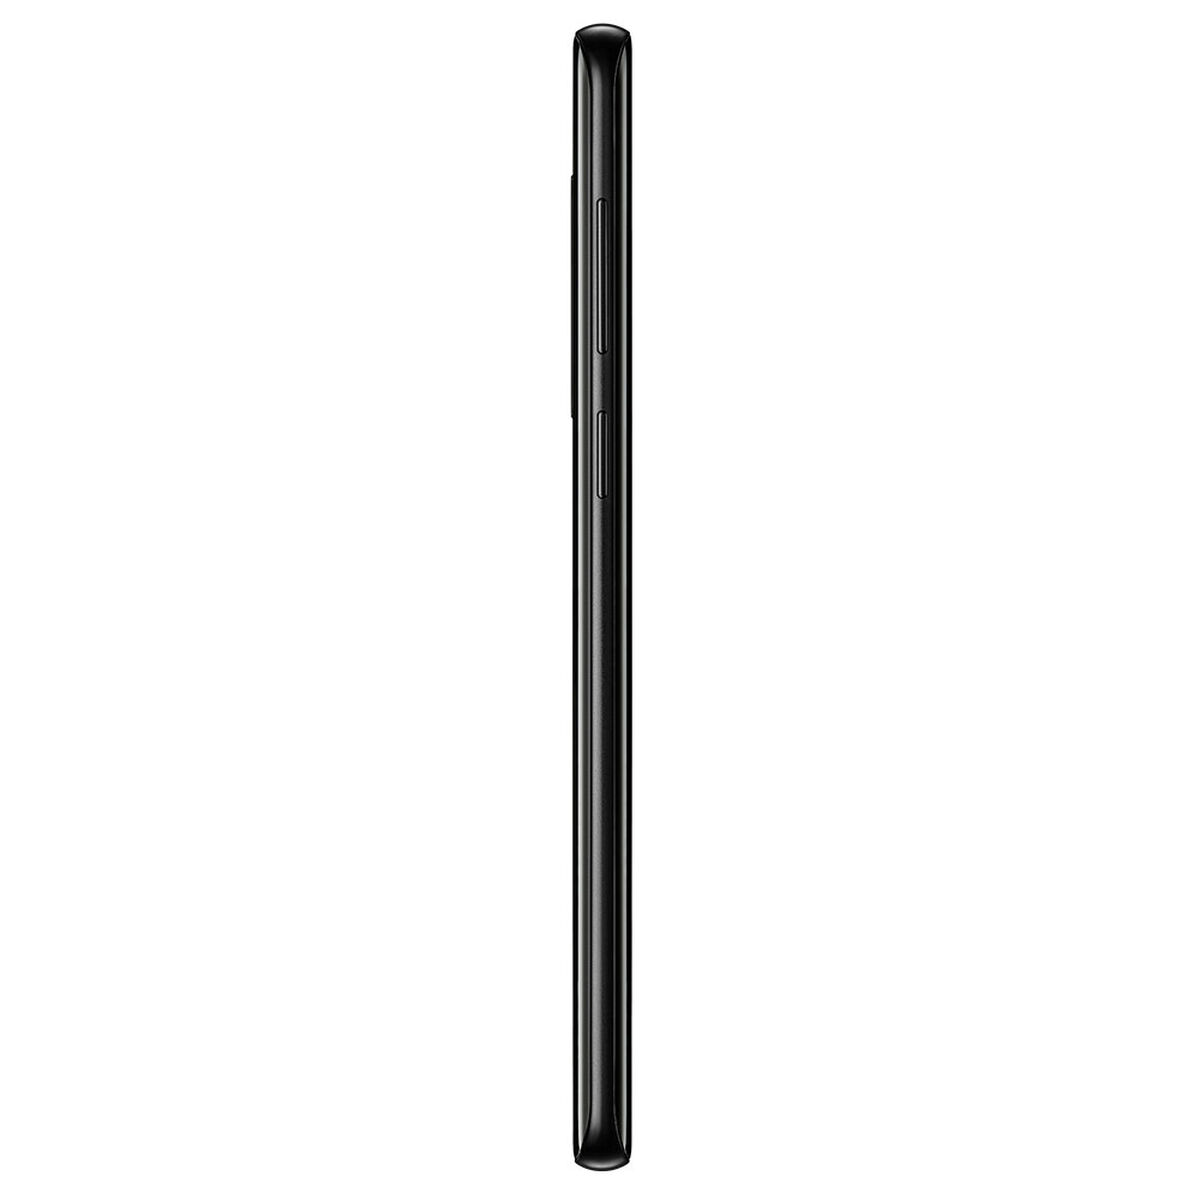 Celular Samsung Galaxy S9 Plus 6.2" Negro Liberado